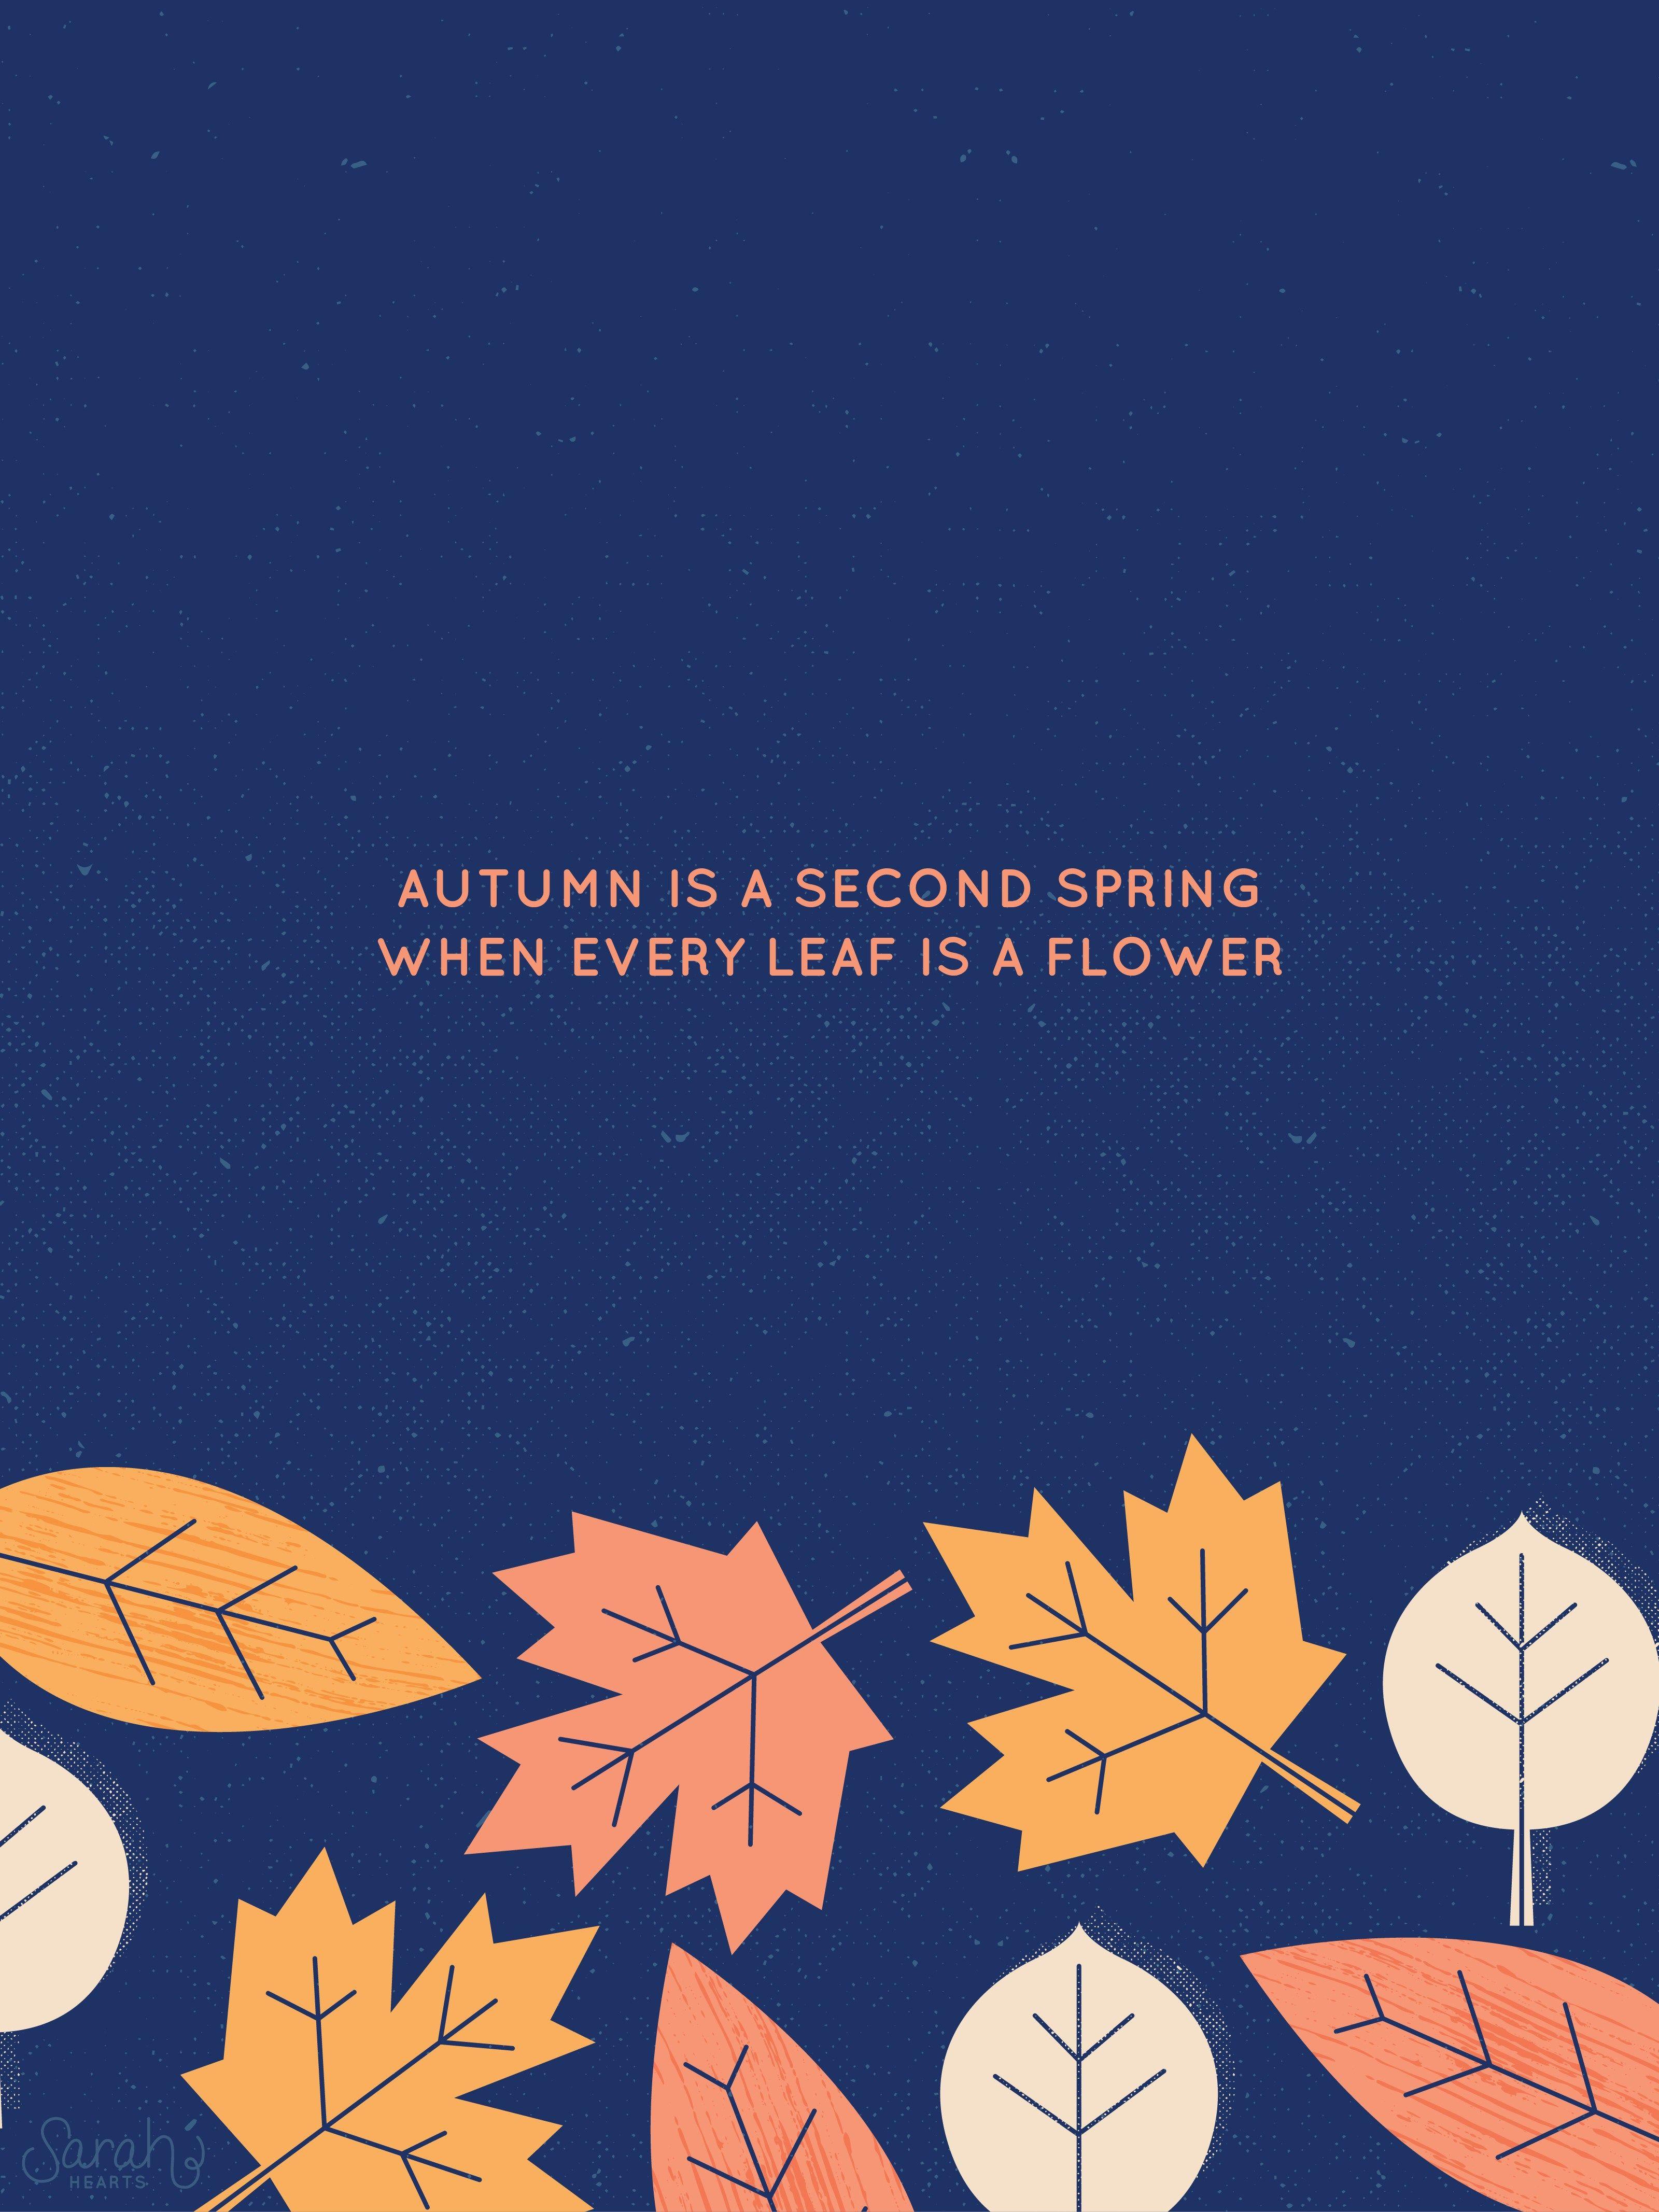 Cute November Wallpapers - Top Free Cute November Backgrounds